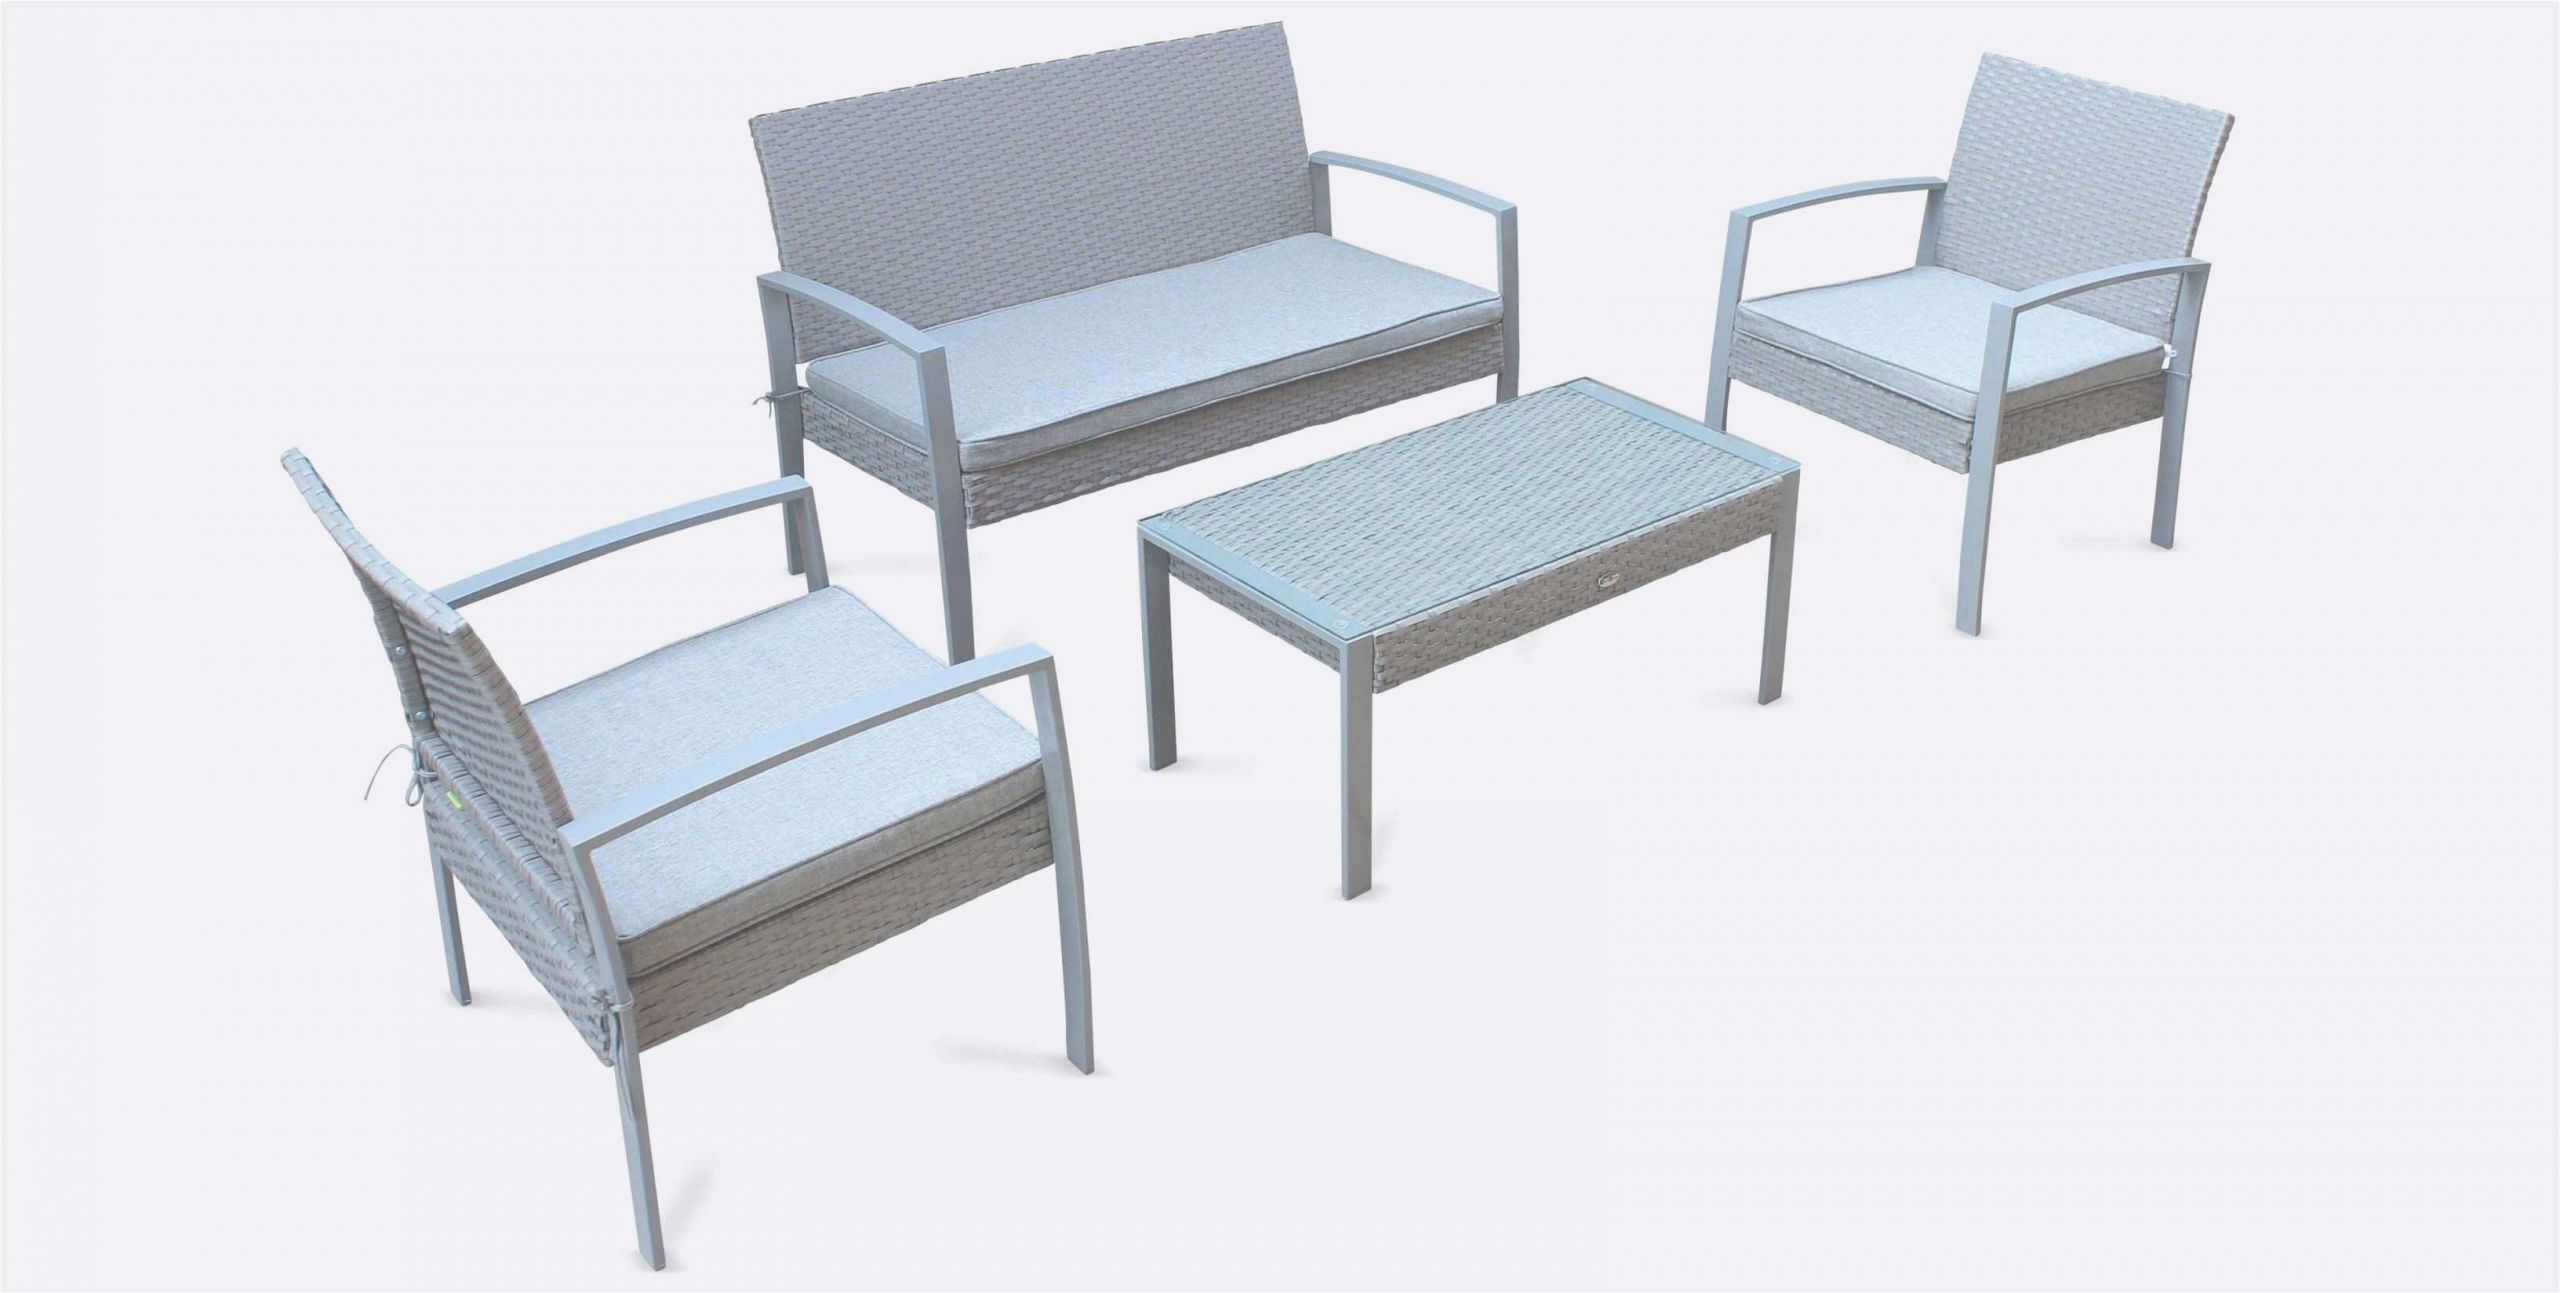 fauteuil de jardin grosfillex le meilleur de 43 de luxe table jardin grosfillex des s of fauteuil de jardin grosfillex